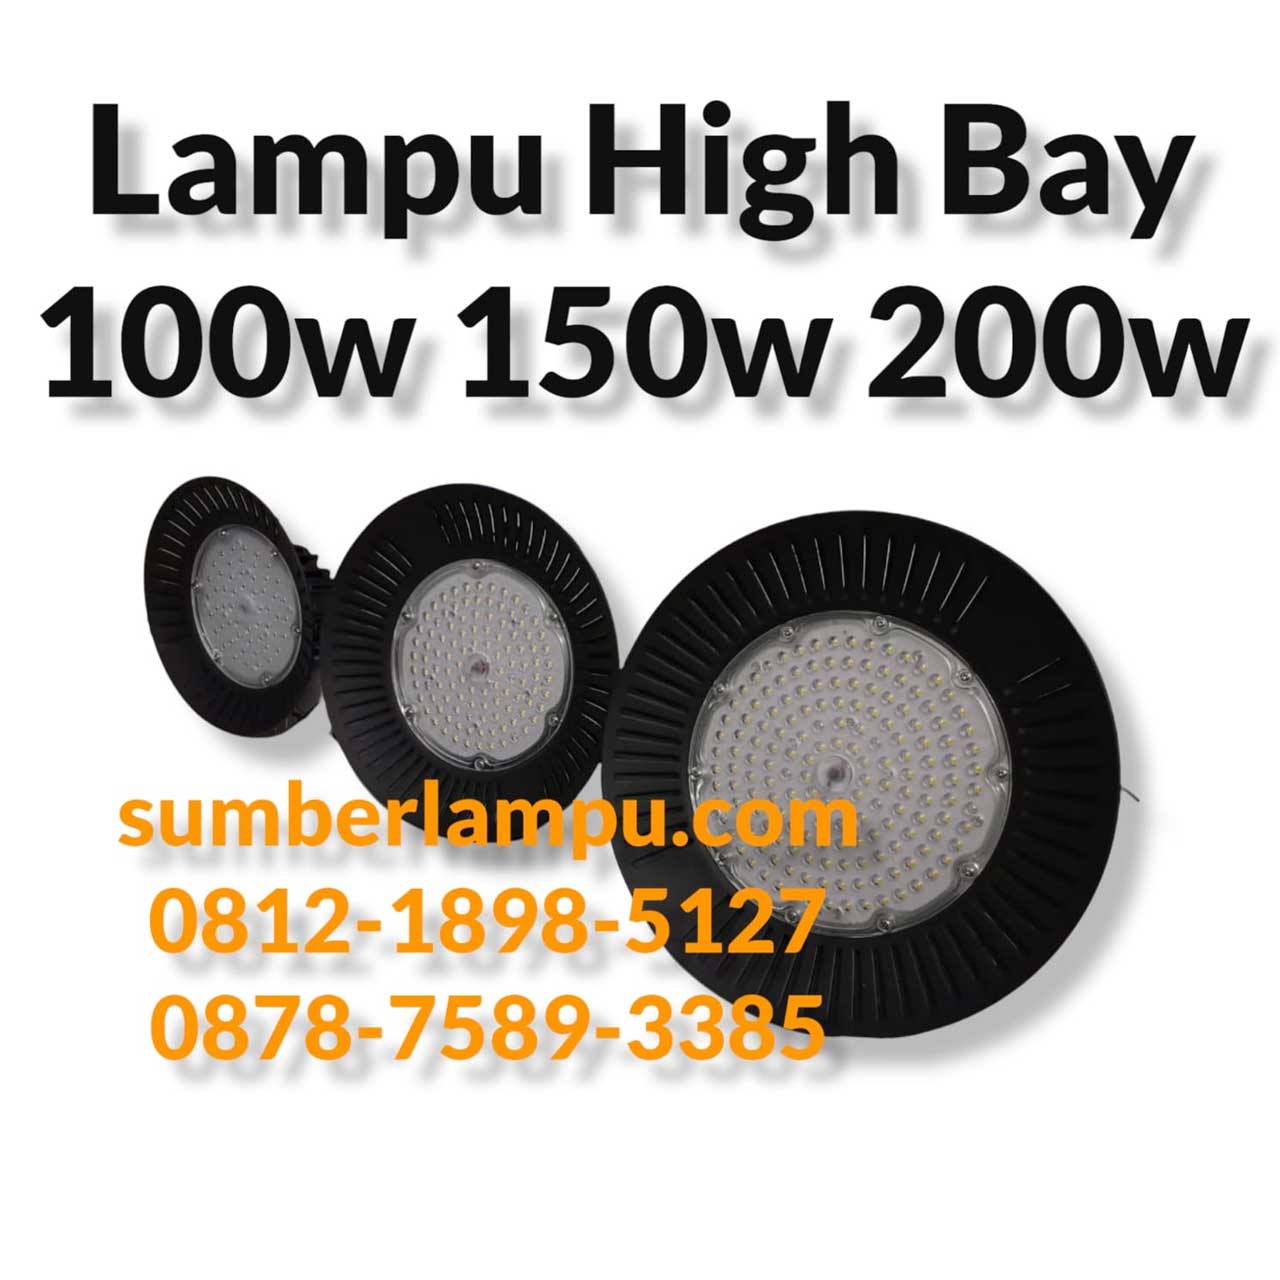 lampu high bay 150w